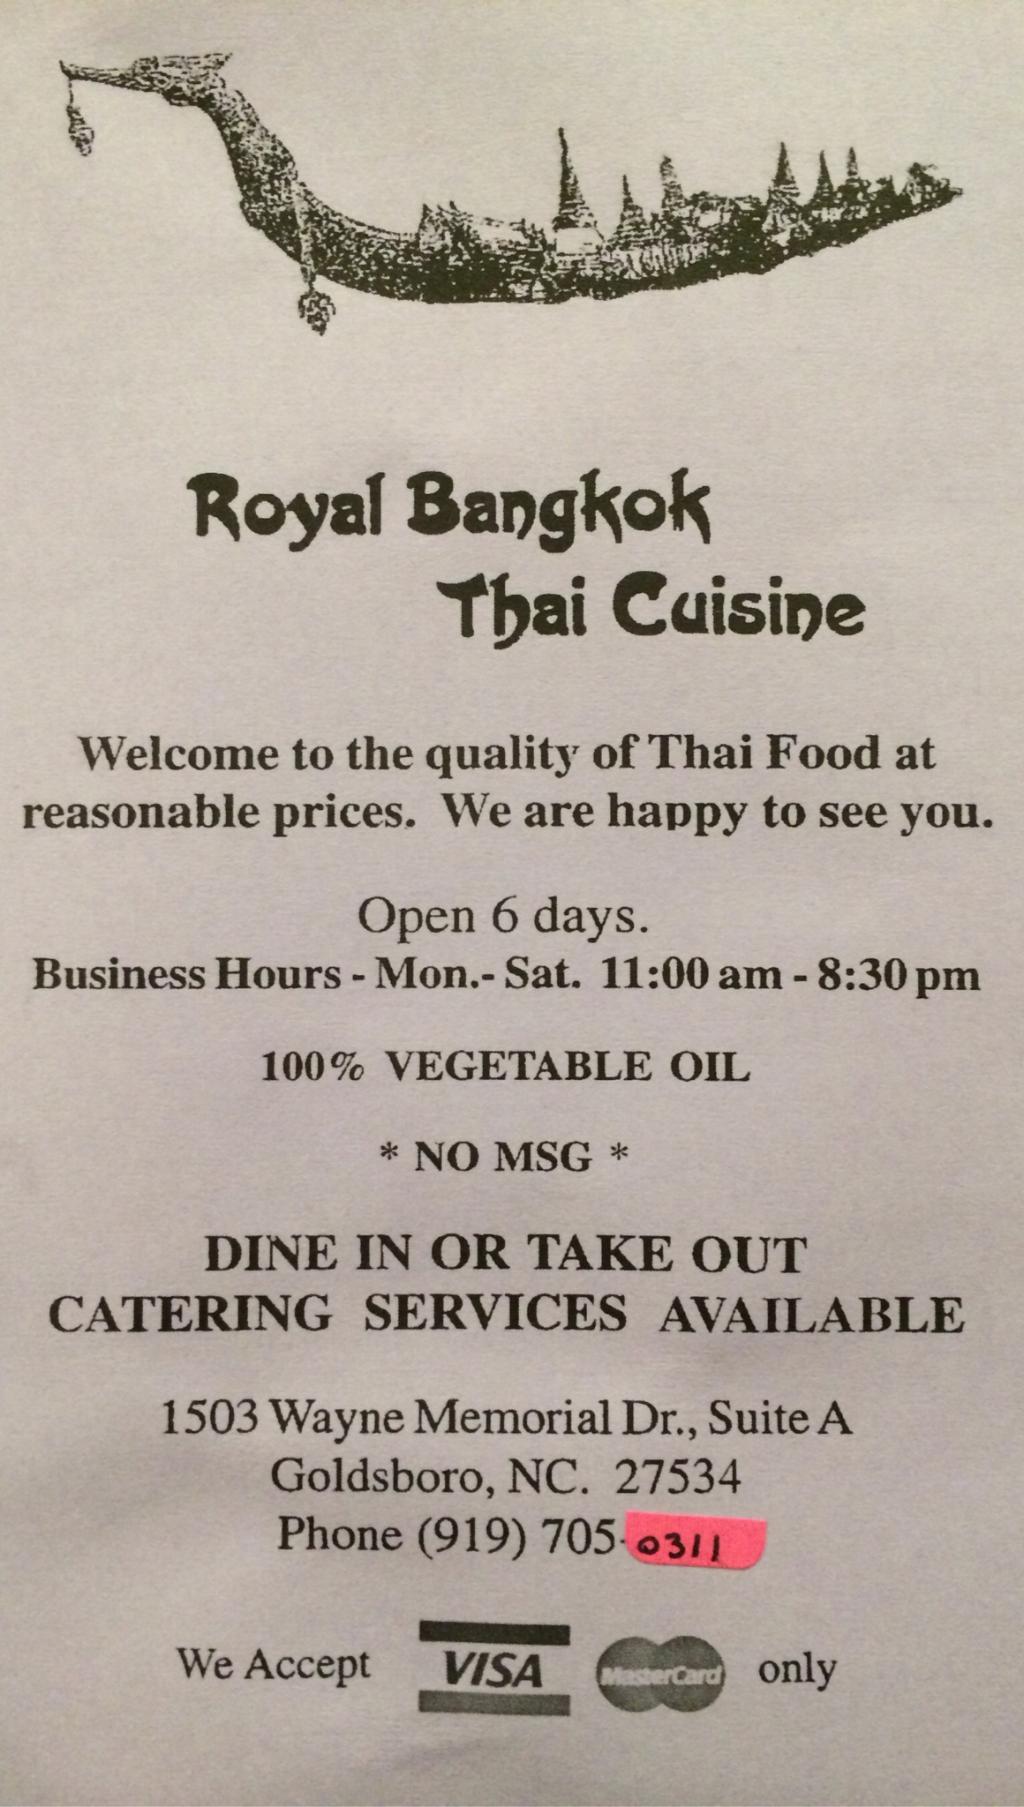 Royal Bangkok tdai Cuisine